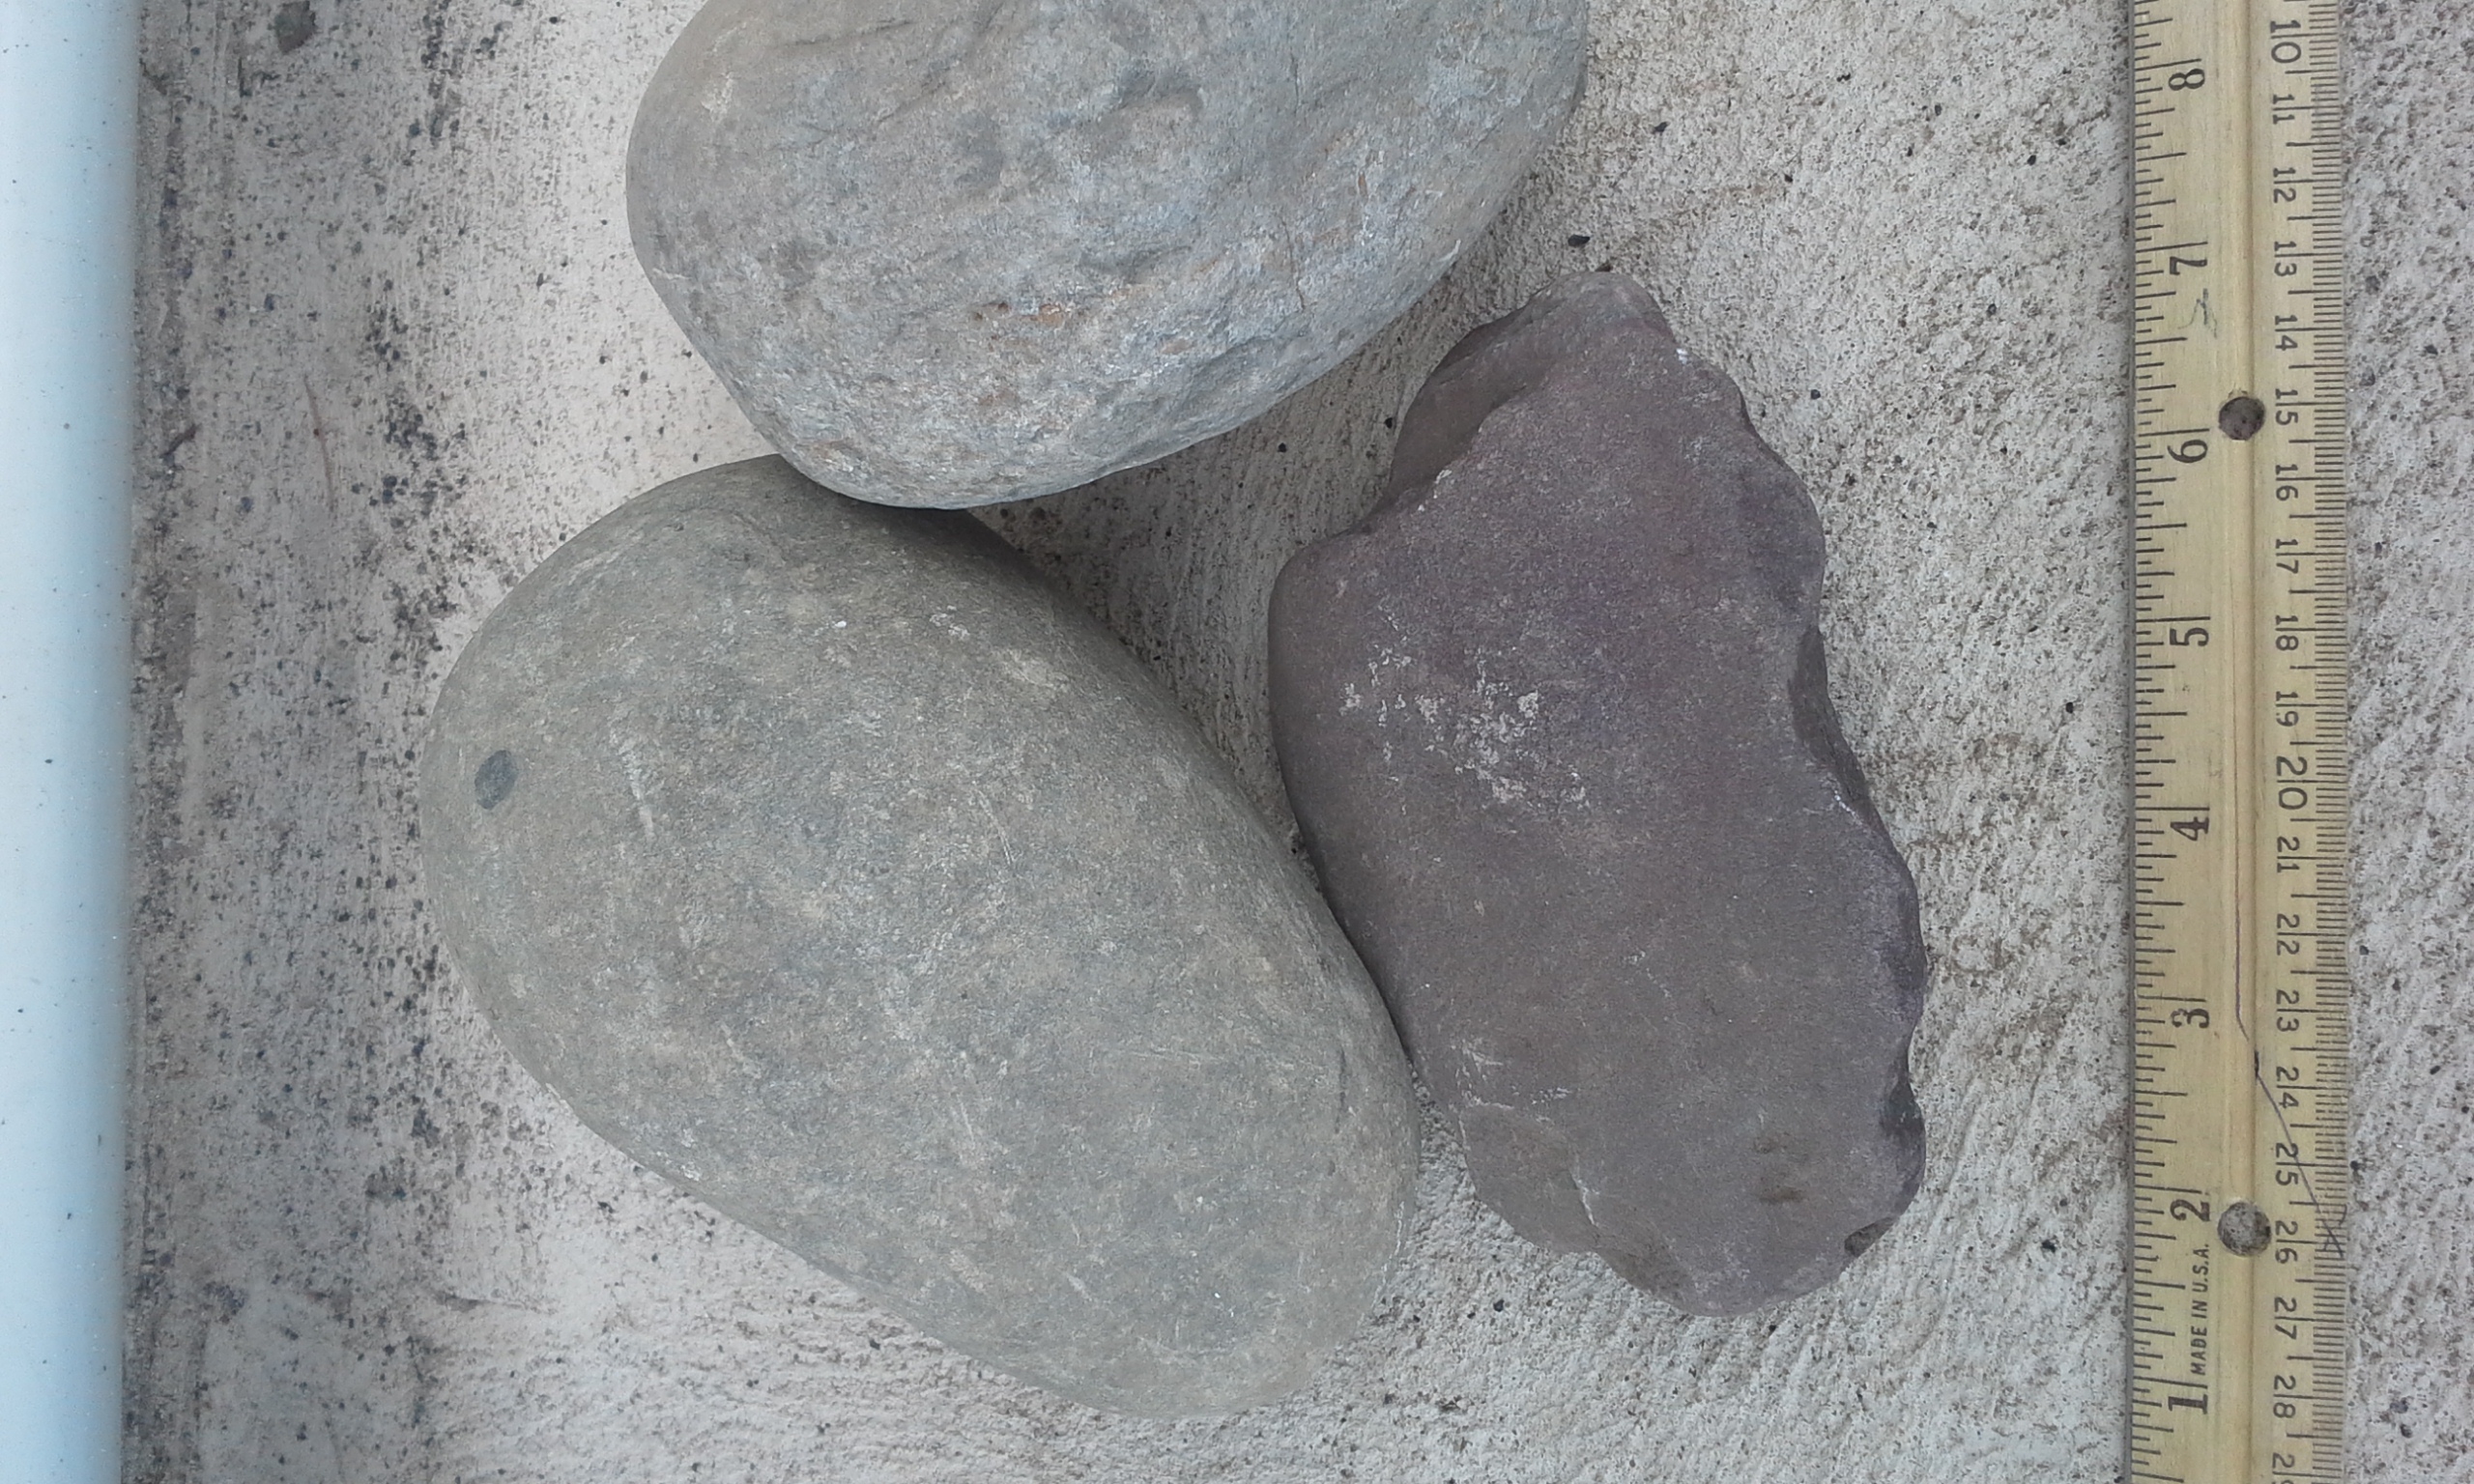 River Jacks Rock Stone (5-12)